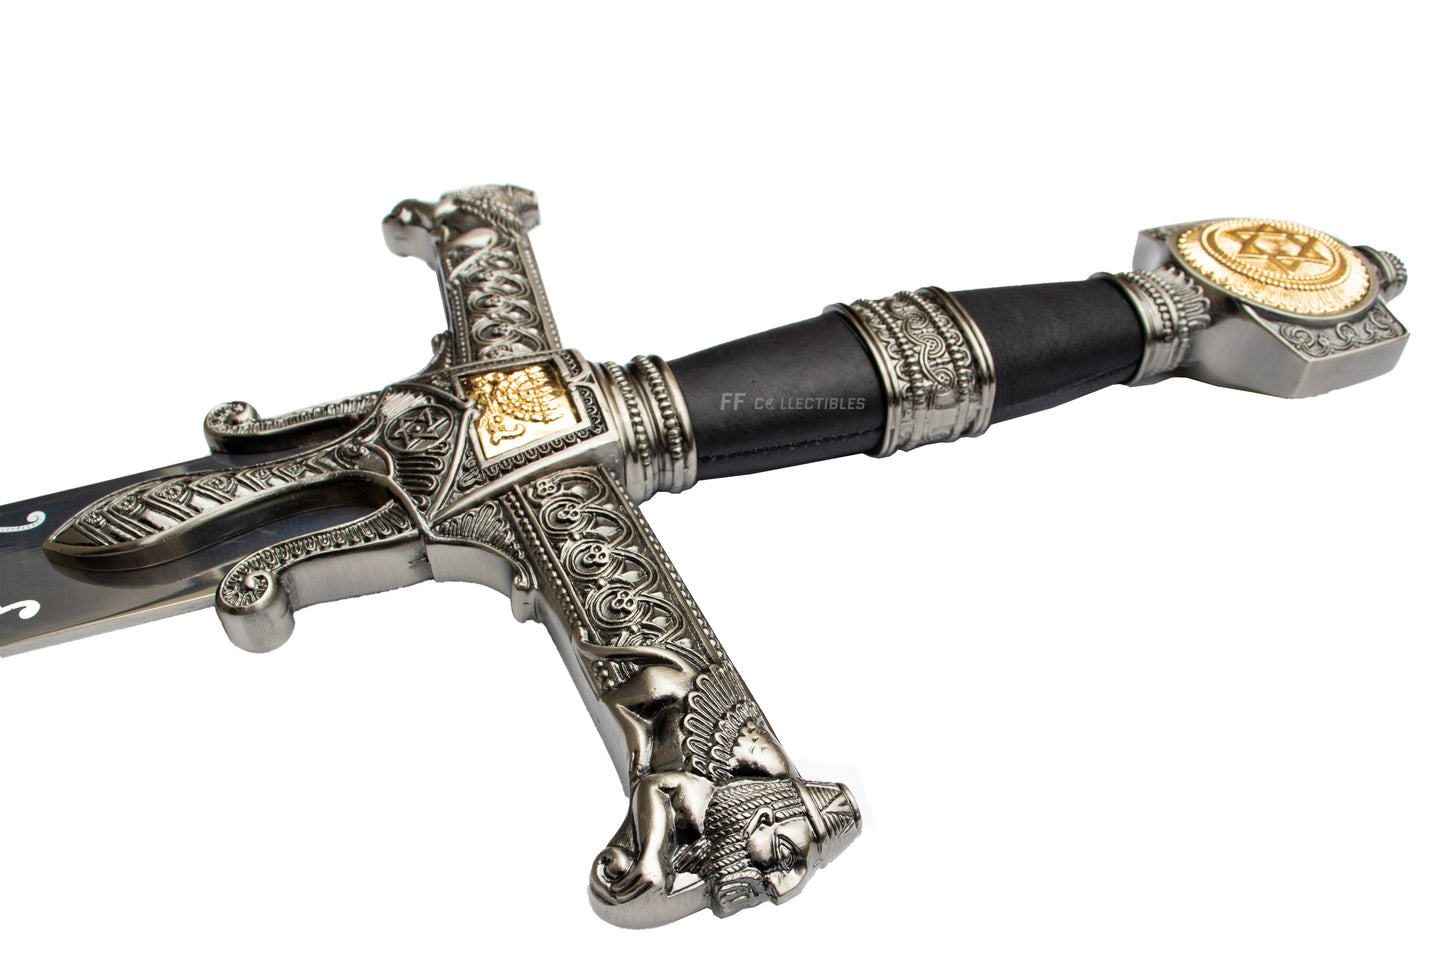 SWORD OF SOLOMON, MEDIEVAL KNIGHTS TEMPLAR CRUSADER SWORD (with FREE wall plaque)